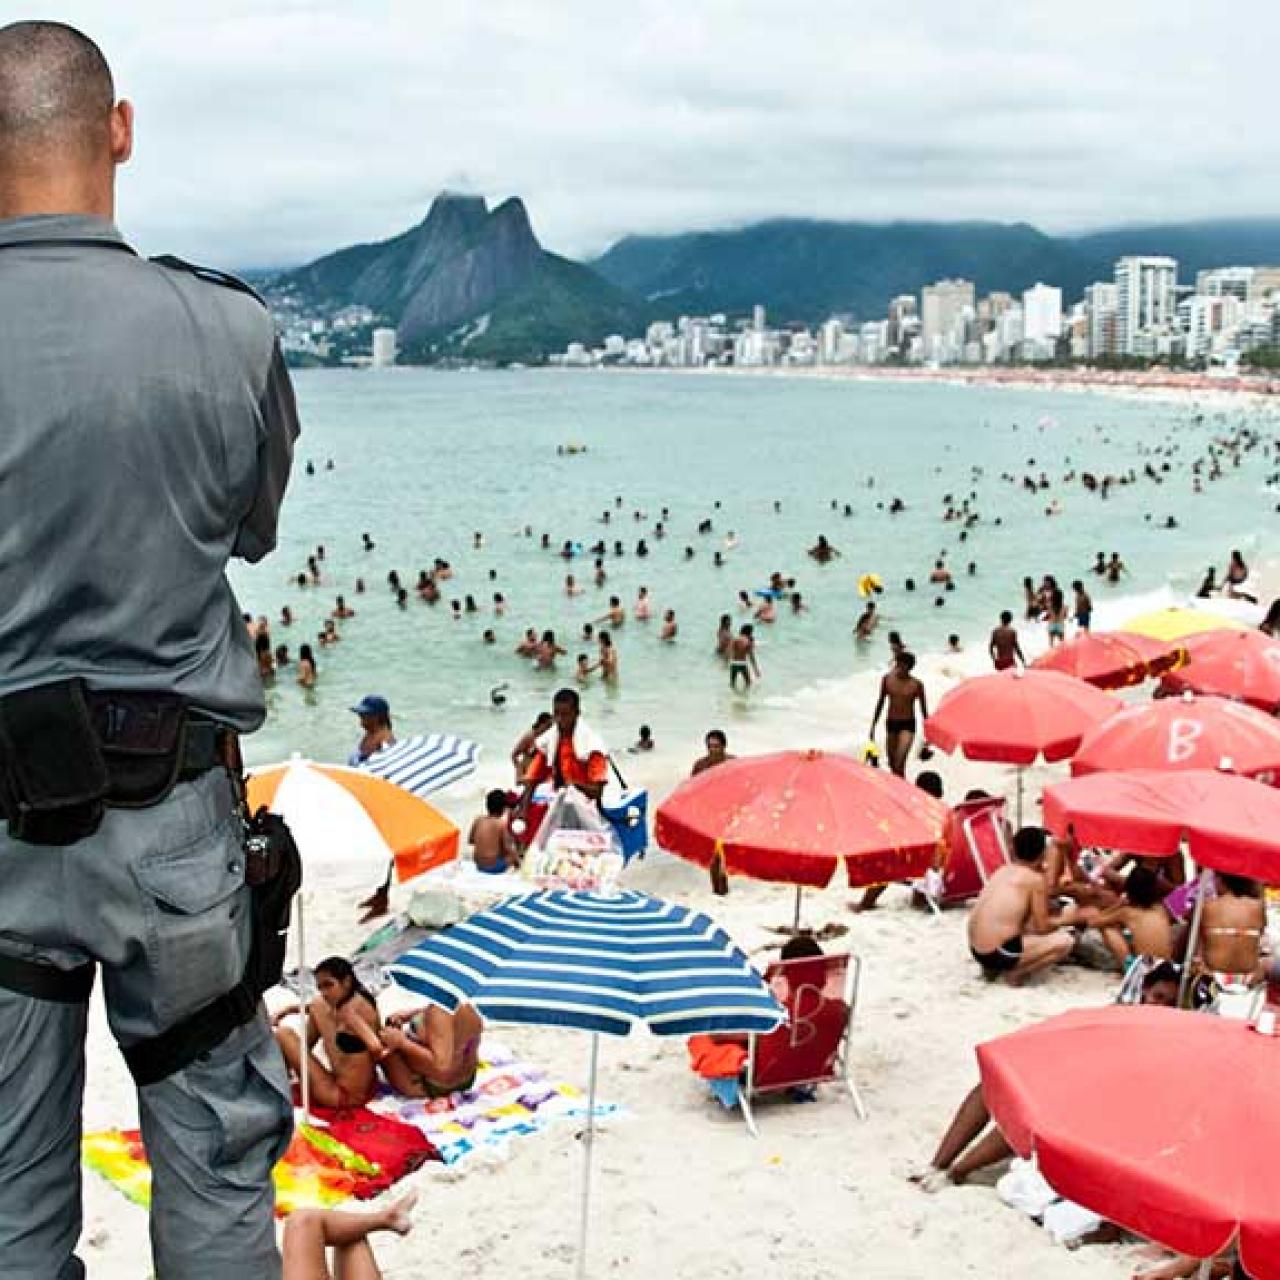 Best way to see Rio de Janeiro